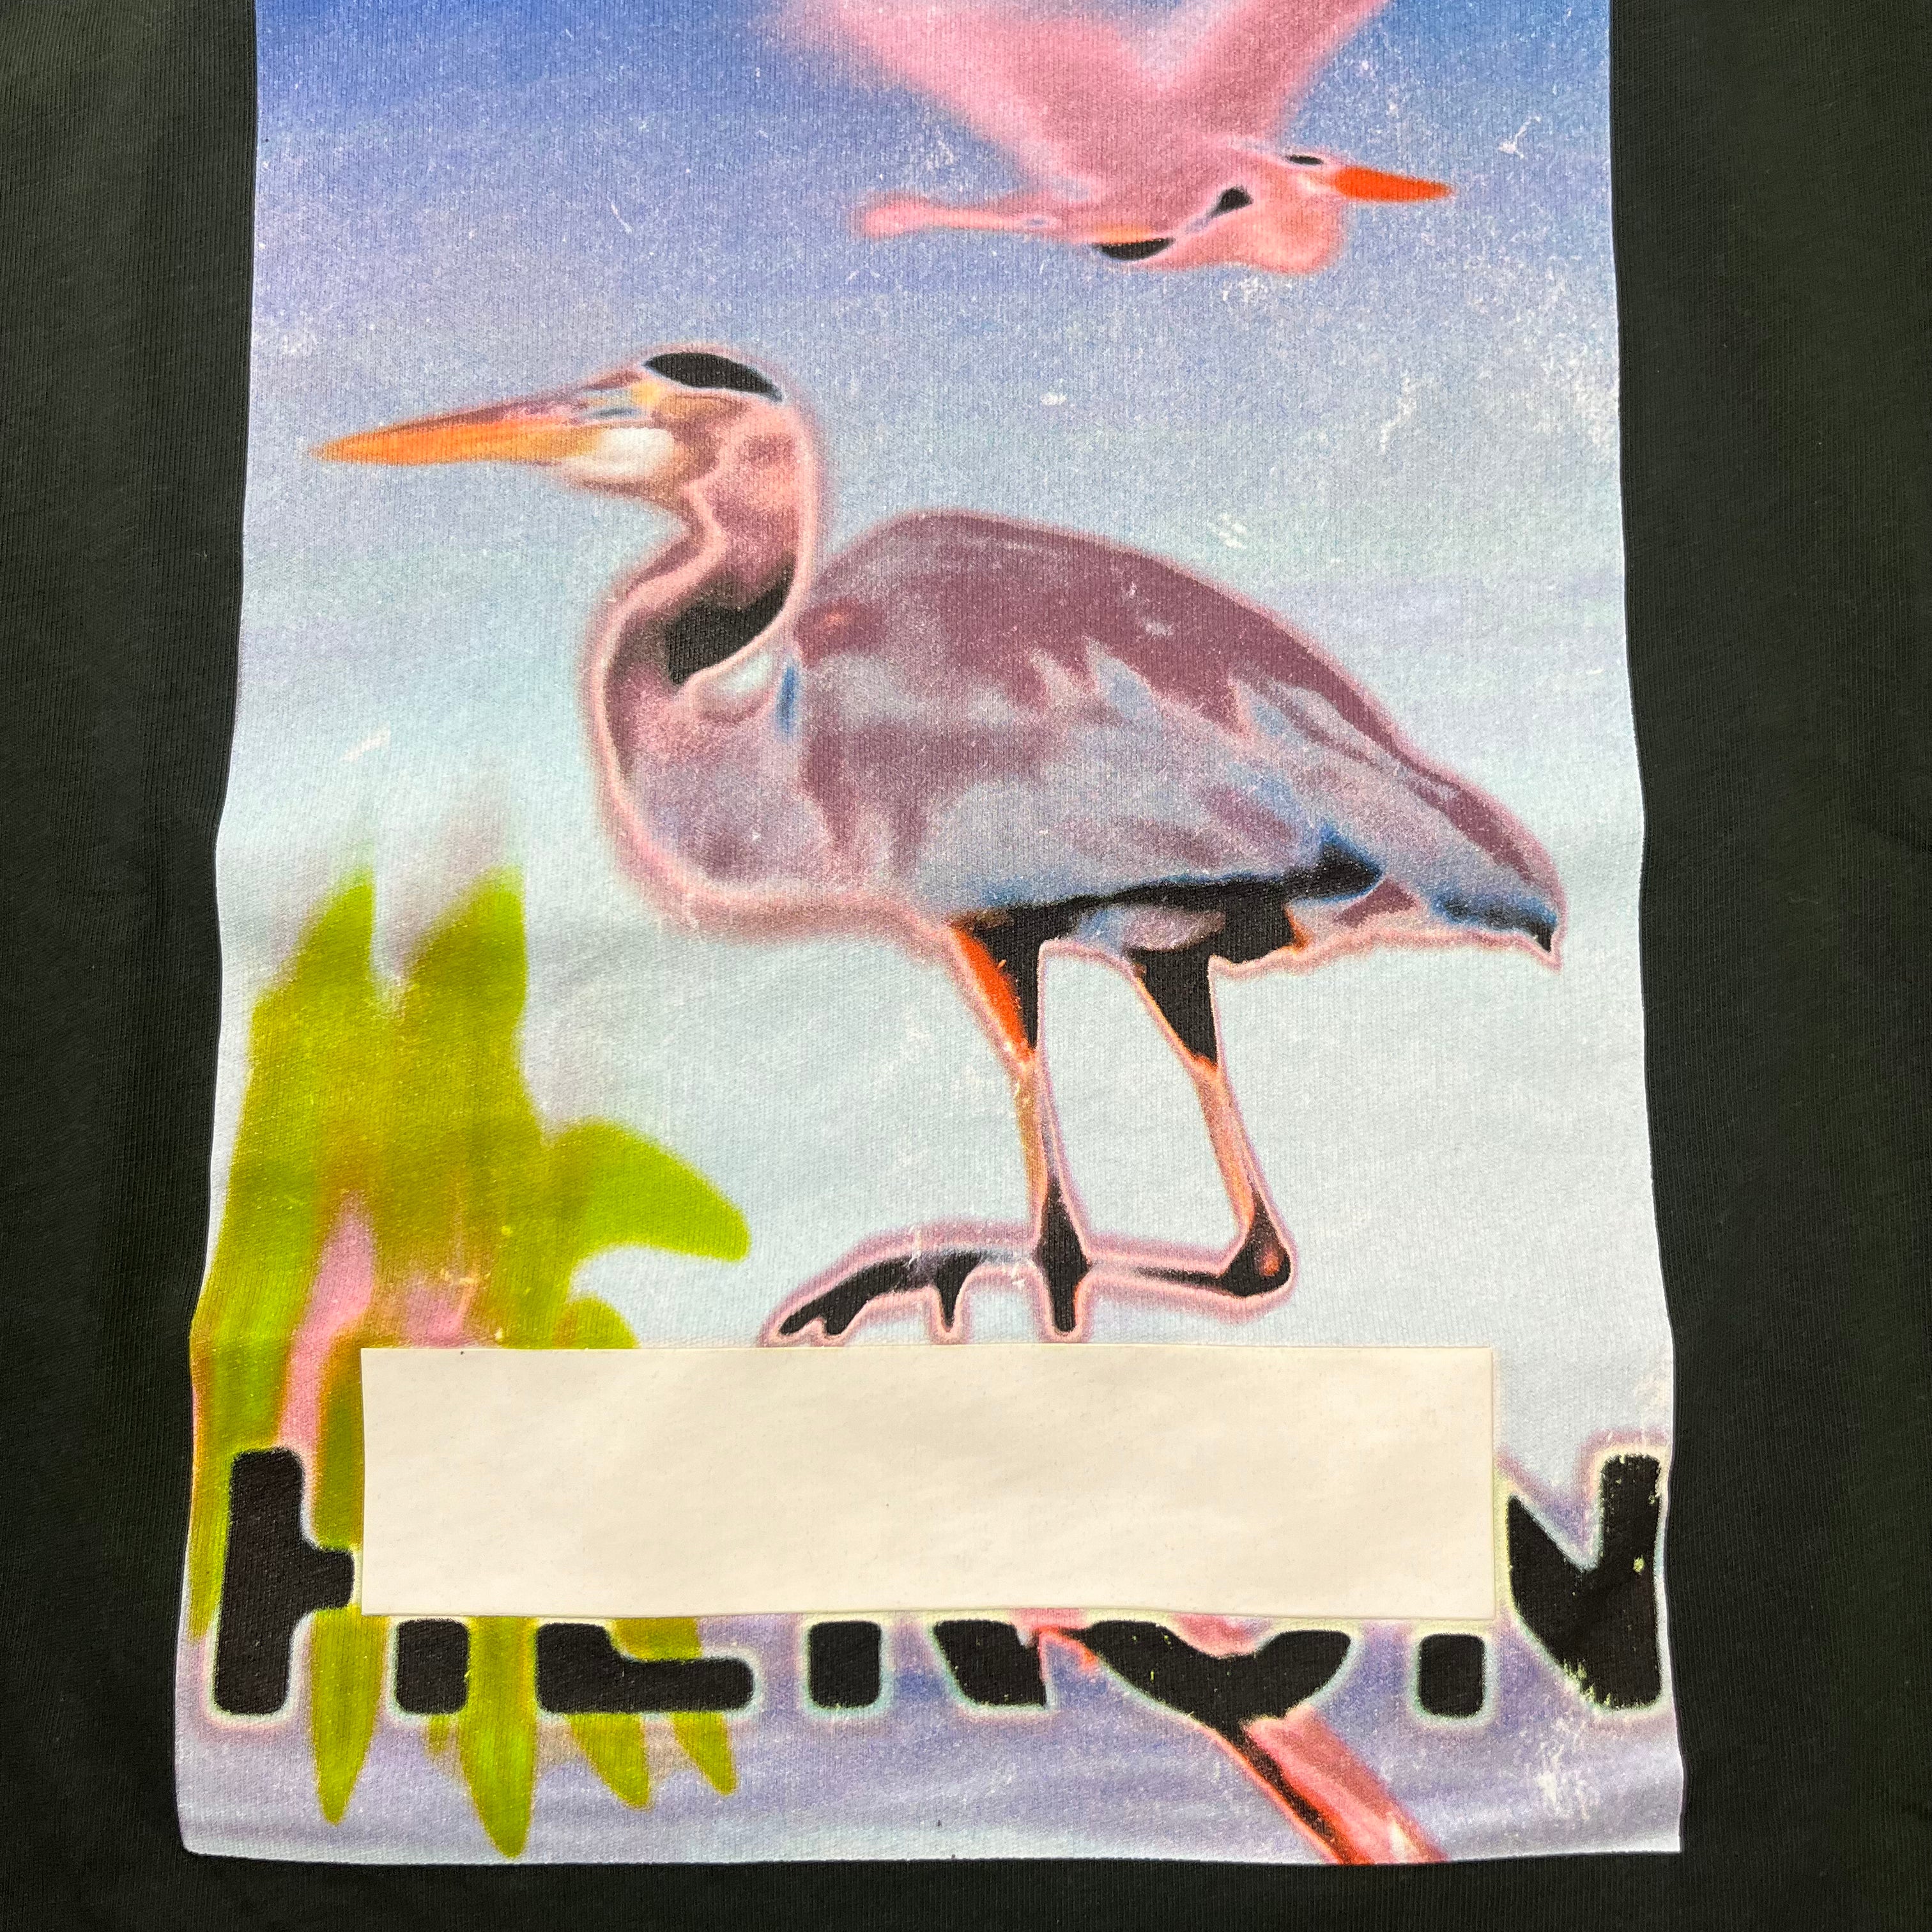 Heron Preston Graphic T-Shirt